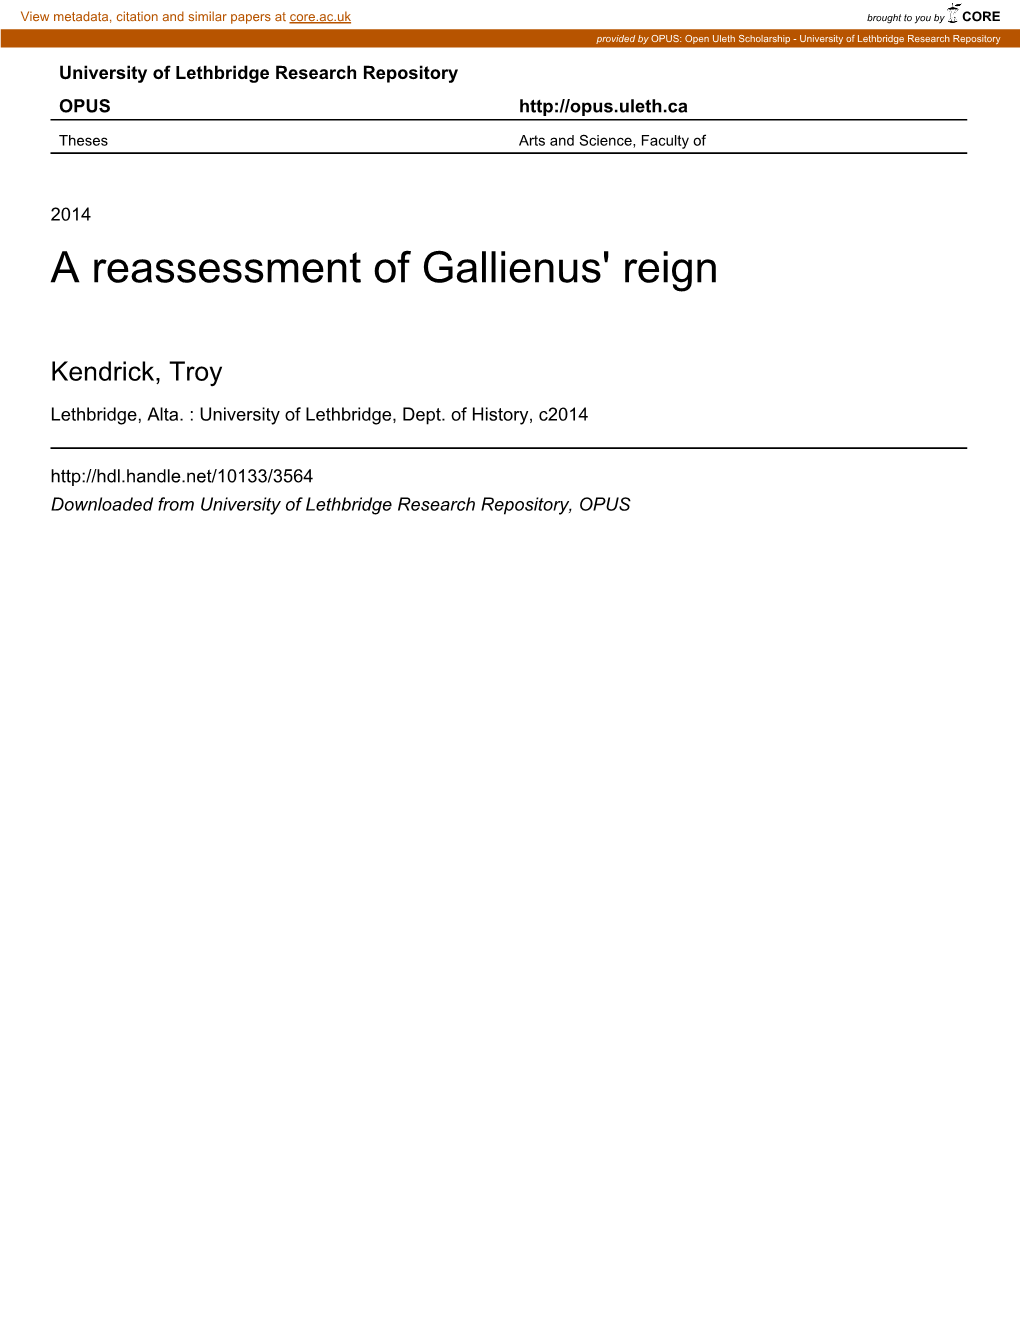 A Reassessment of Gallienus' Reign